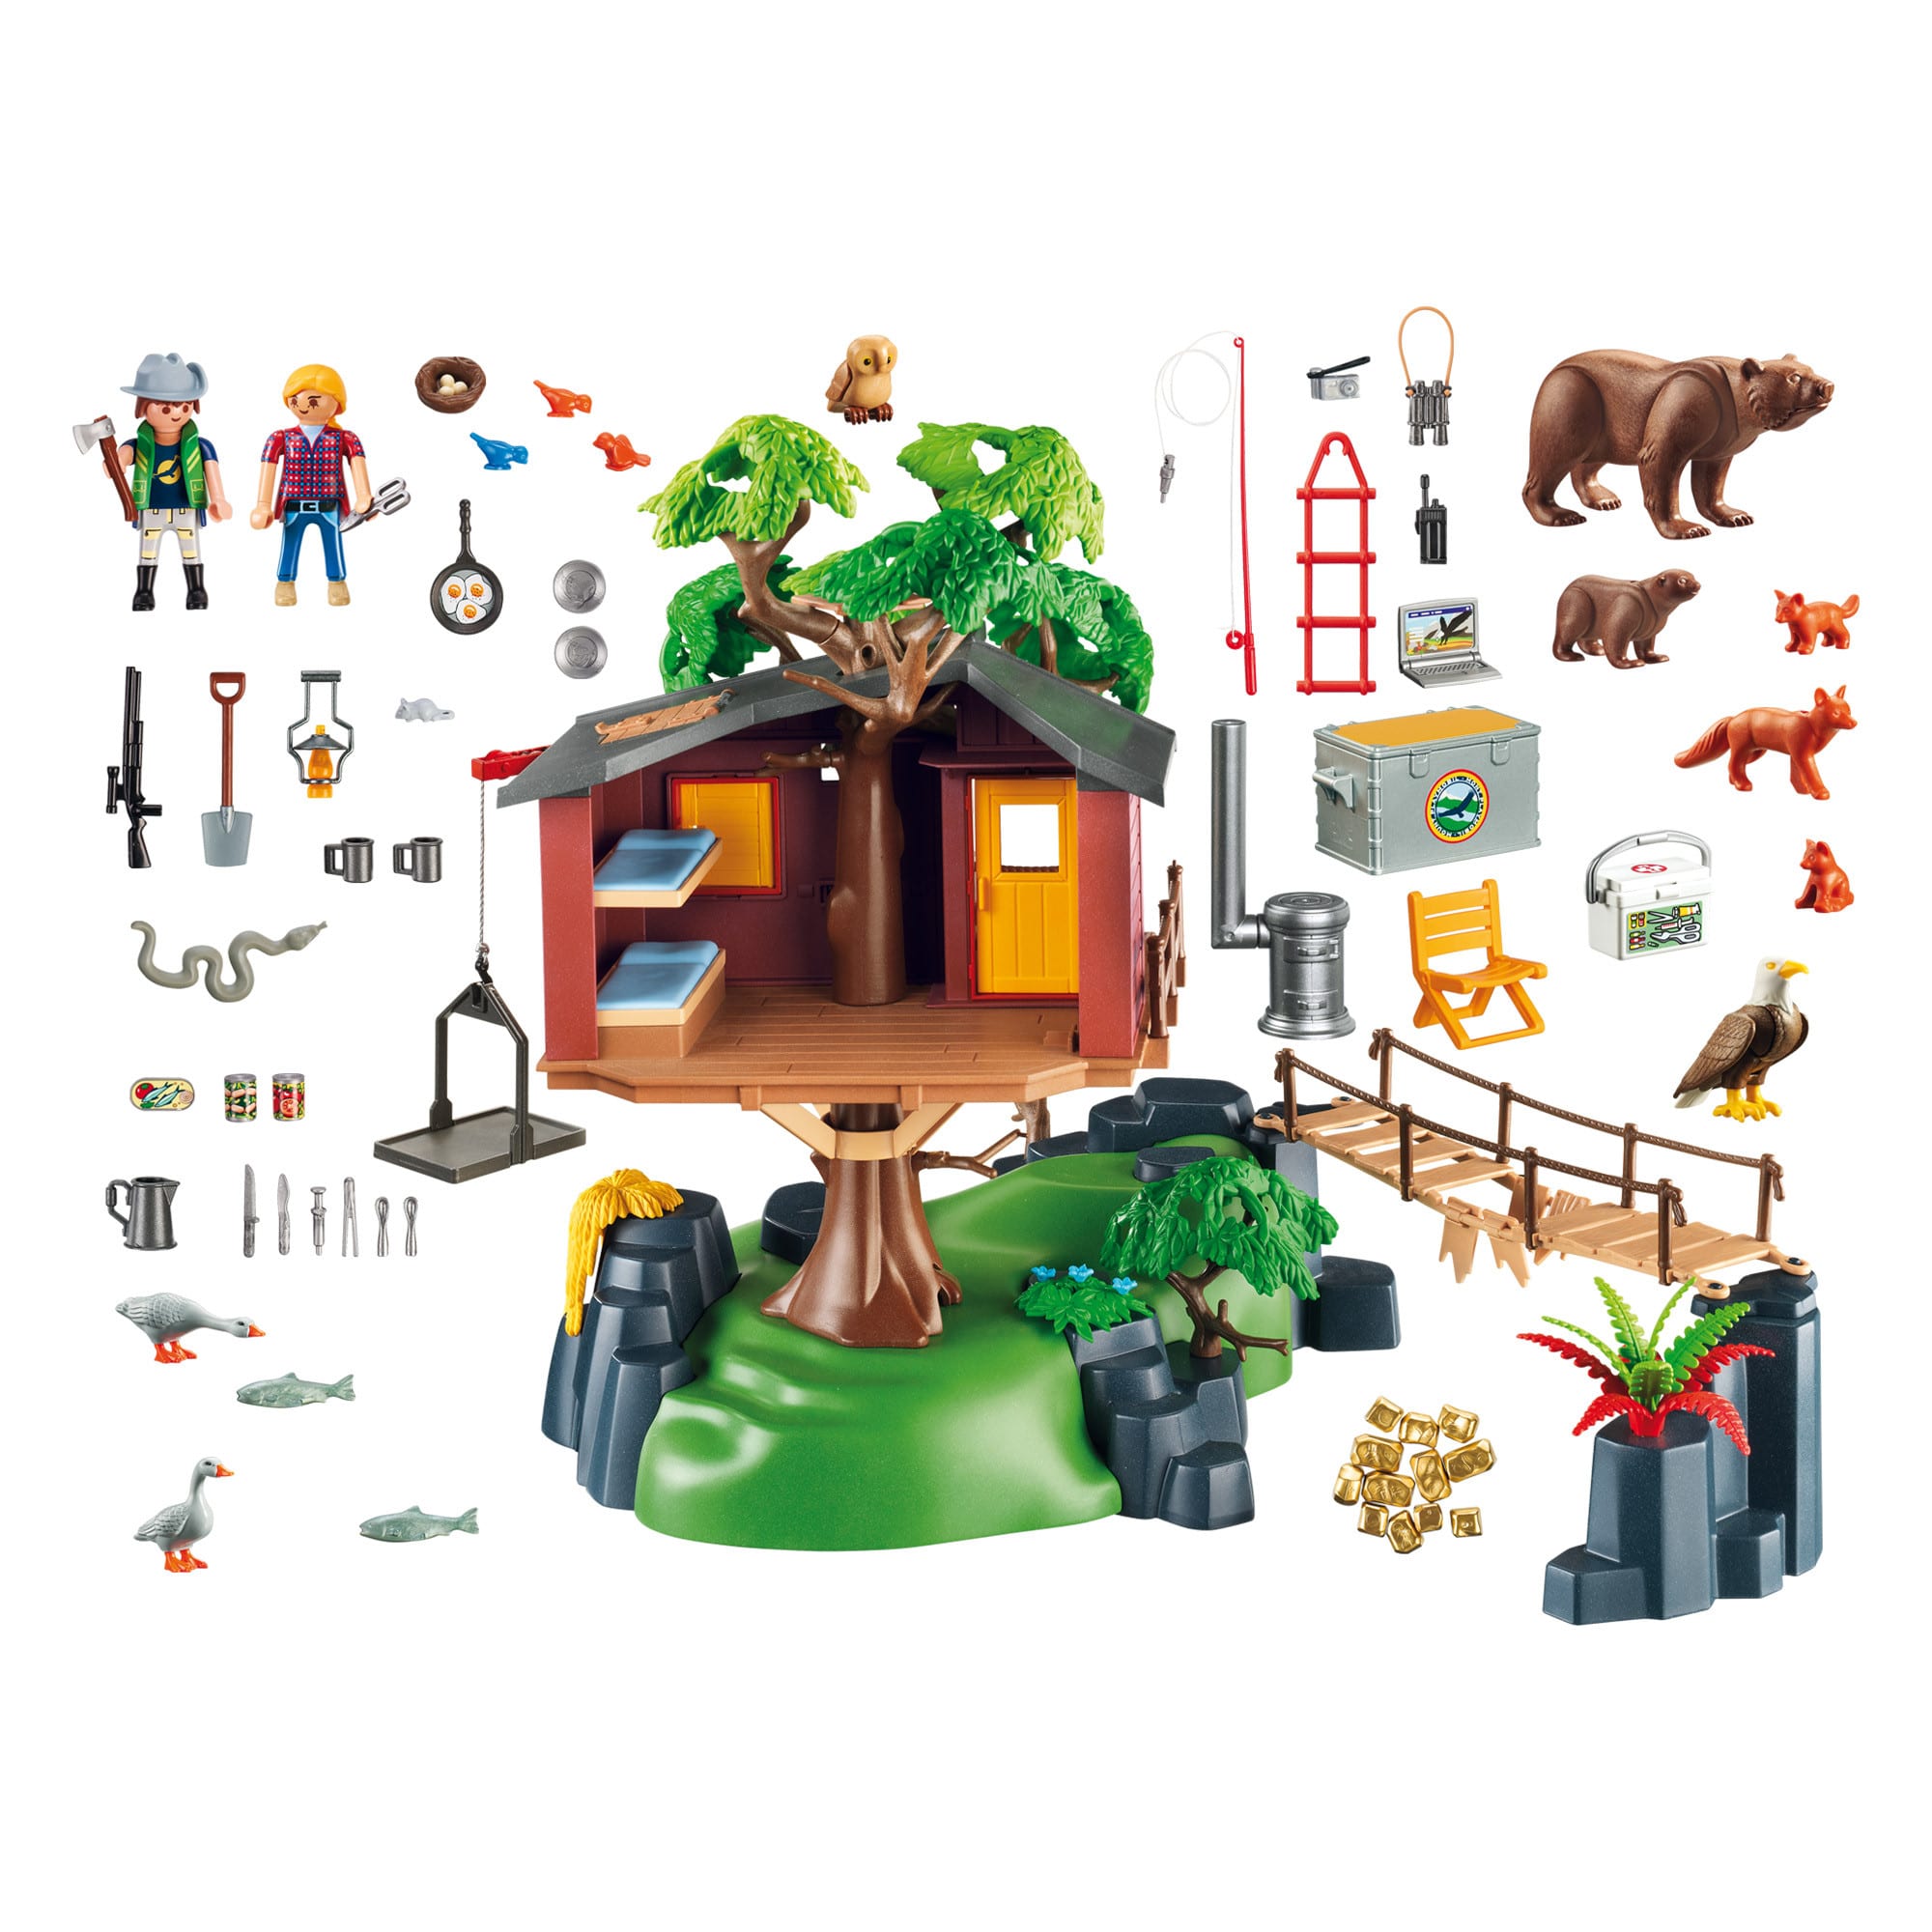 Playmobil - Wild Life - Adventure Tree House 5557